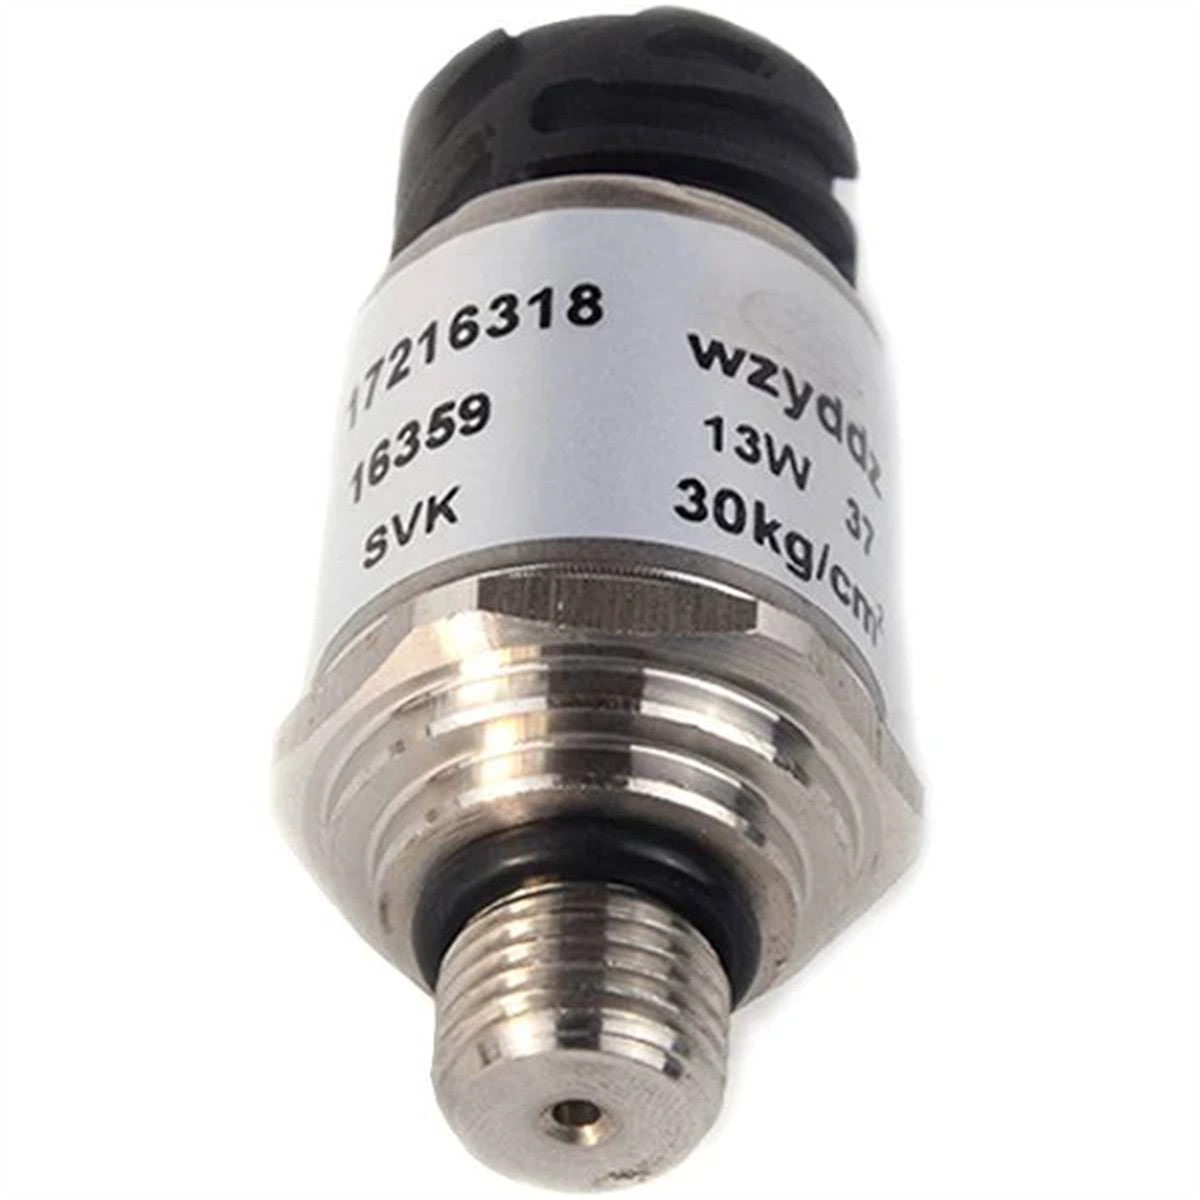 17216318 Pressure Sensor for Volvo Loader L70 L90 L110 L120 L150 L180 - Sinocmp